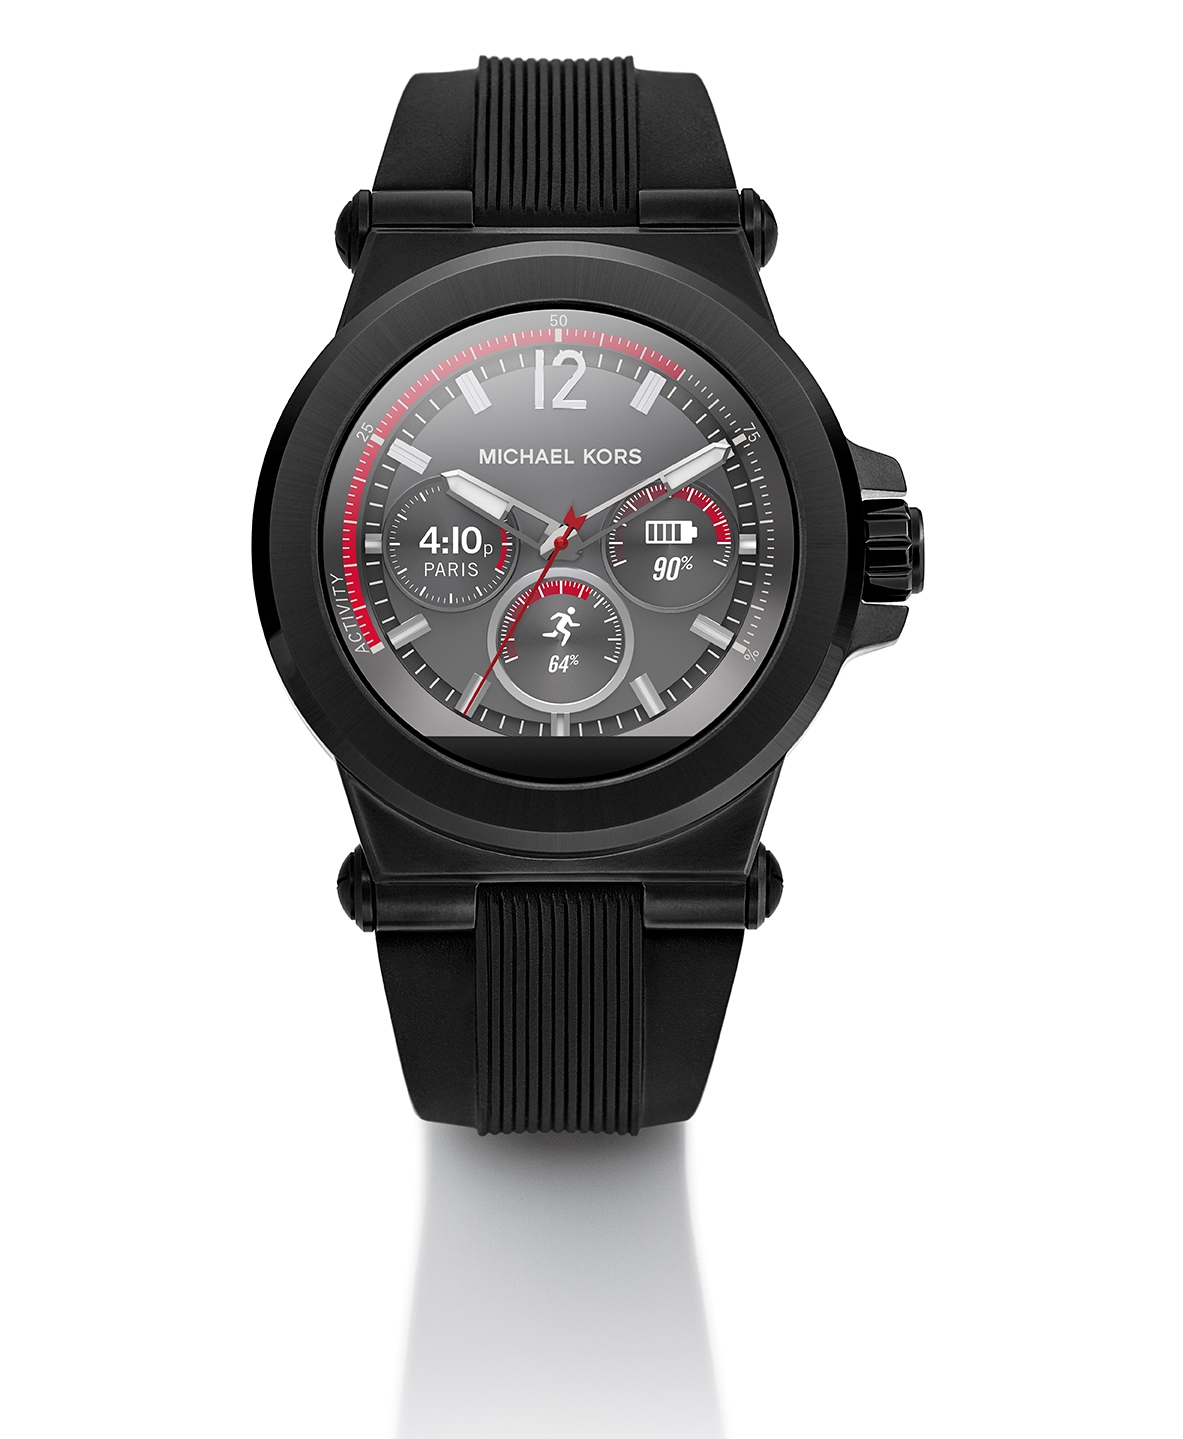 Michael Kors smartwatch 3